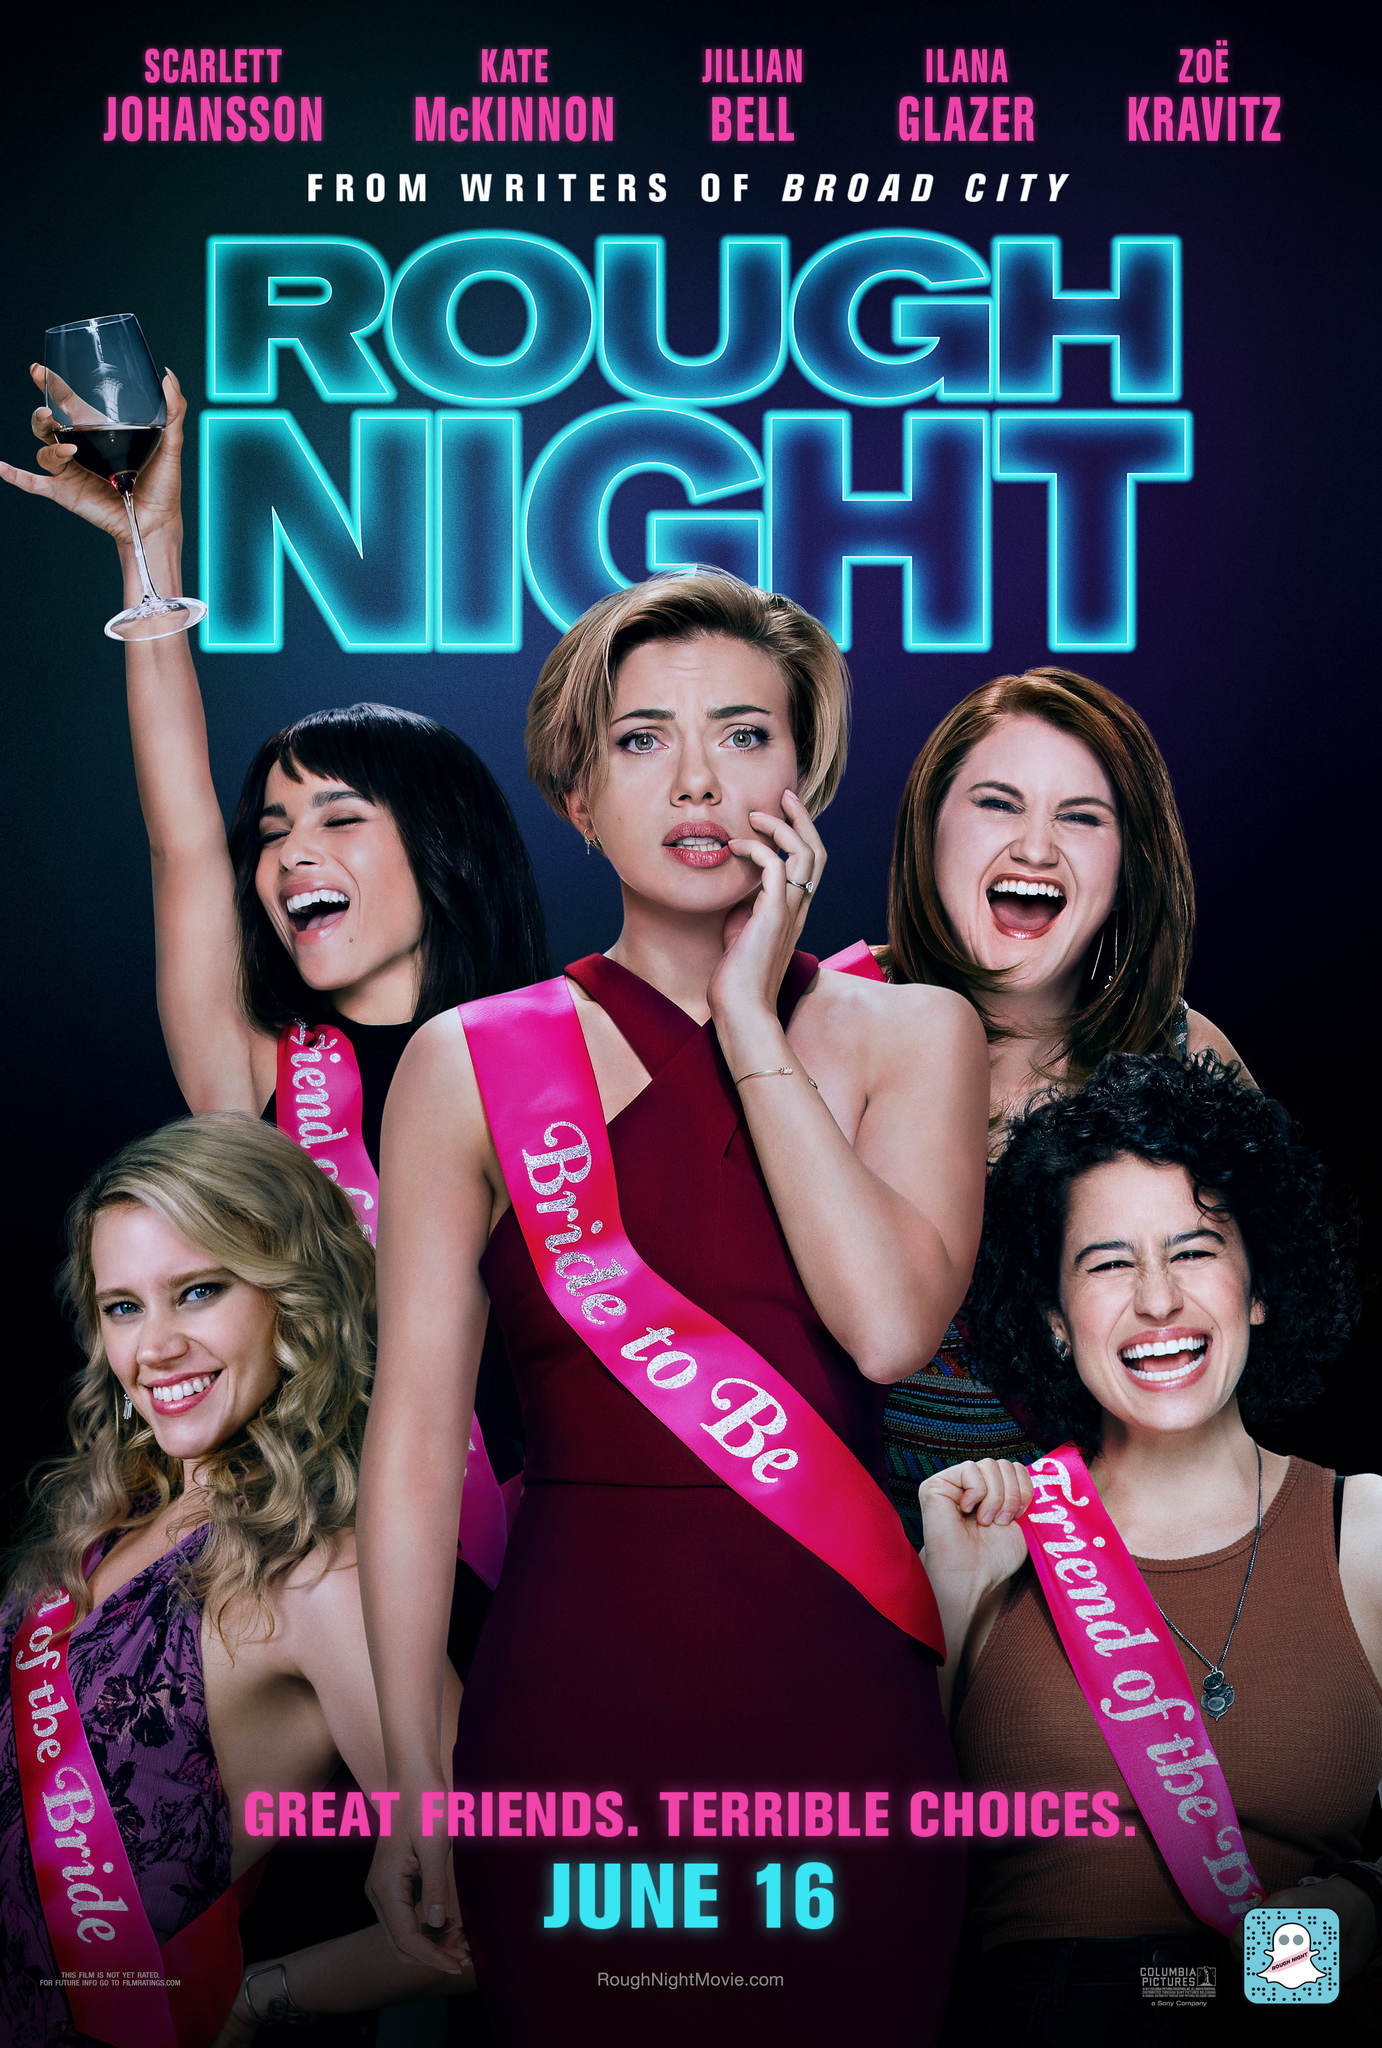 breanna ramos recommends Rough Night Sex Scenes